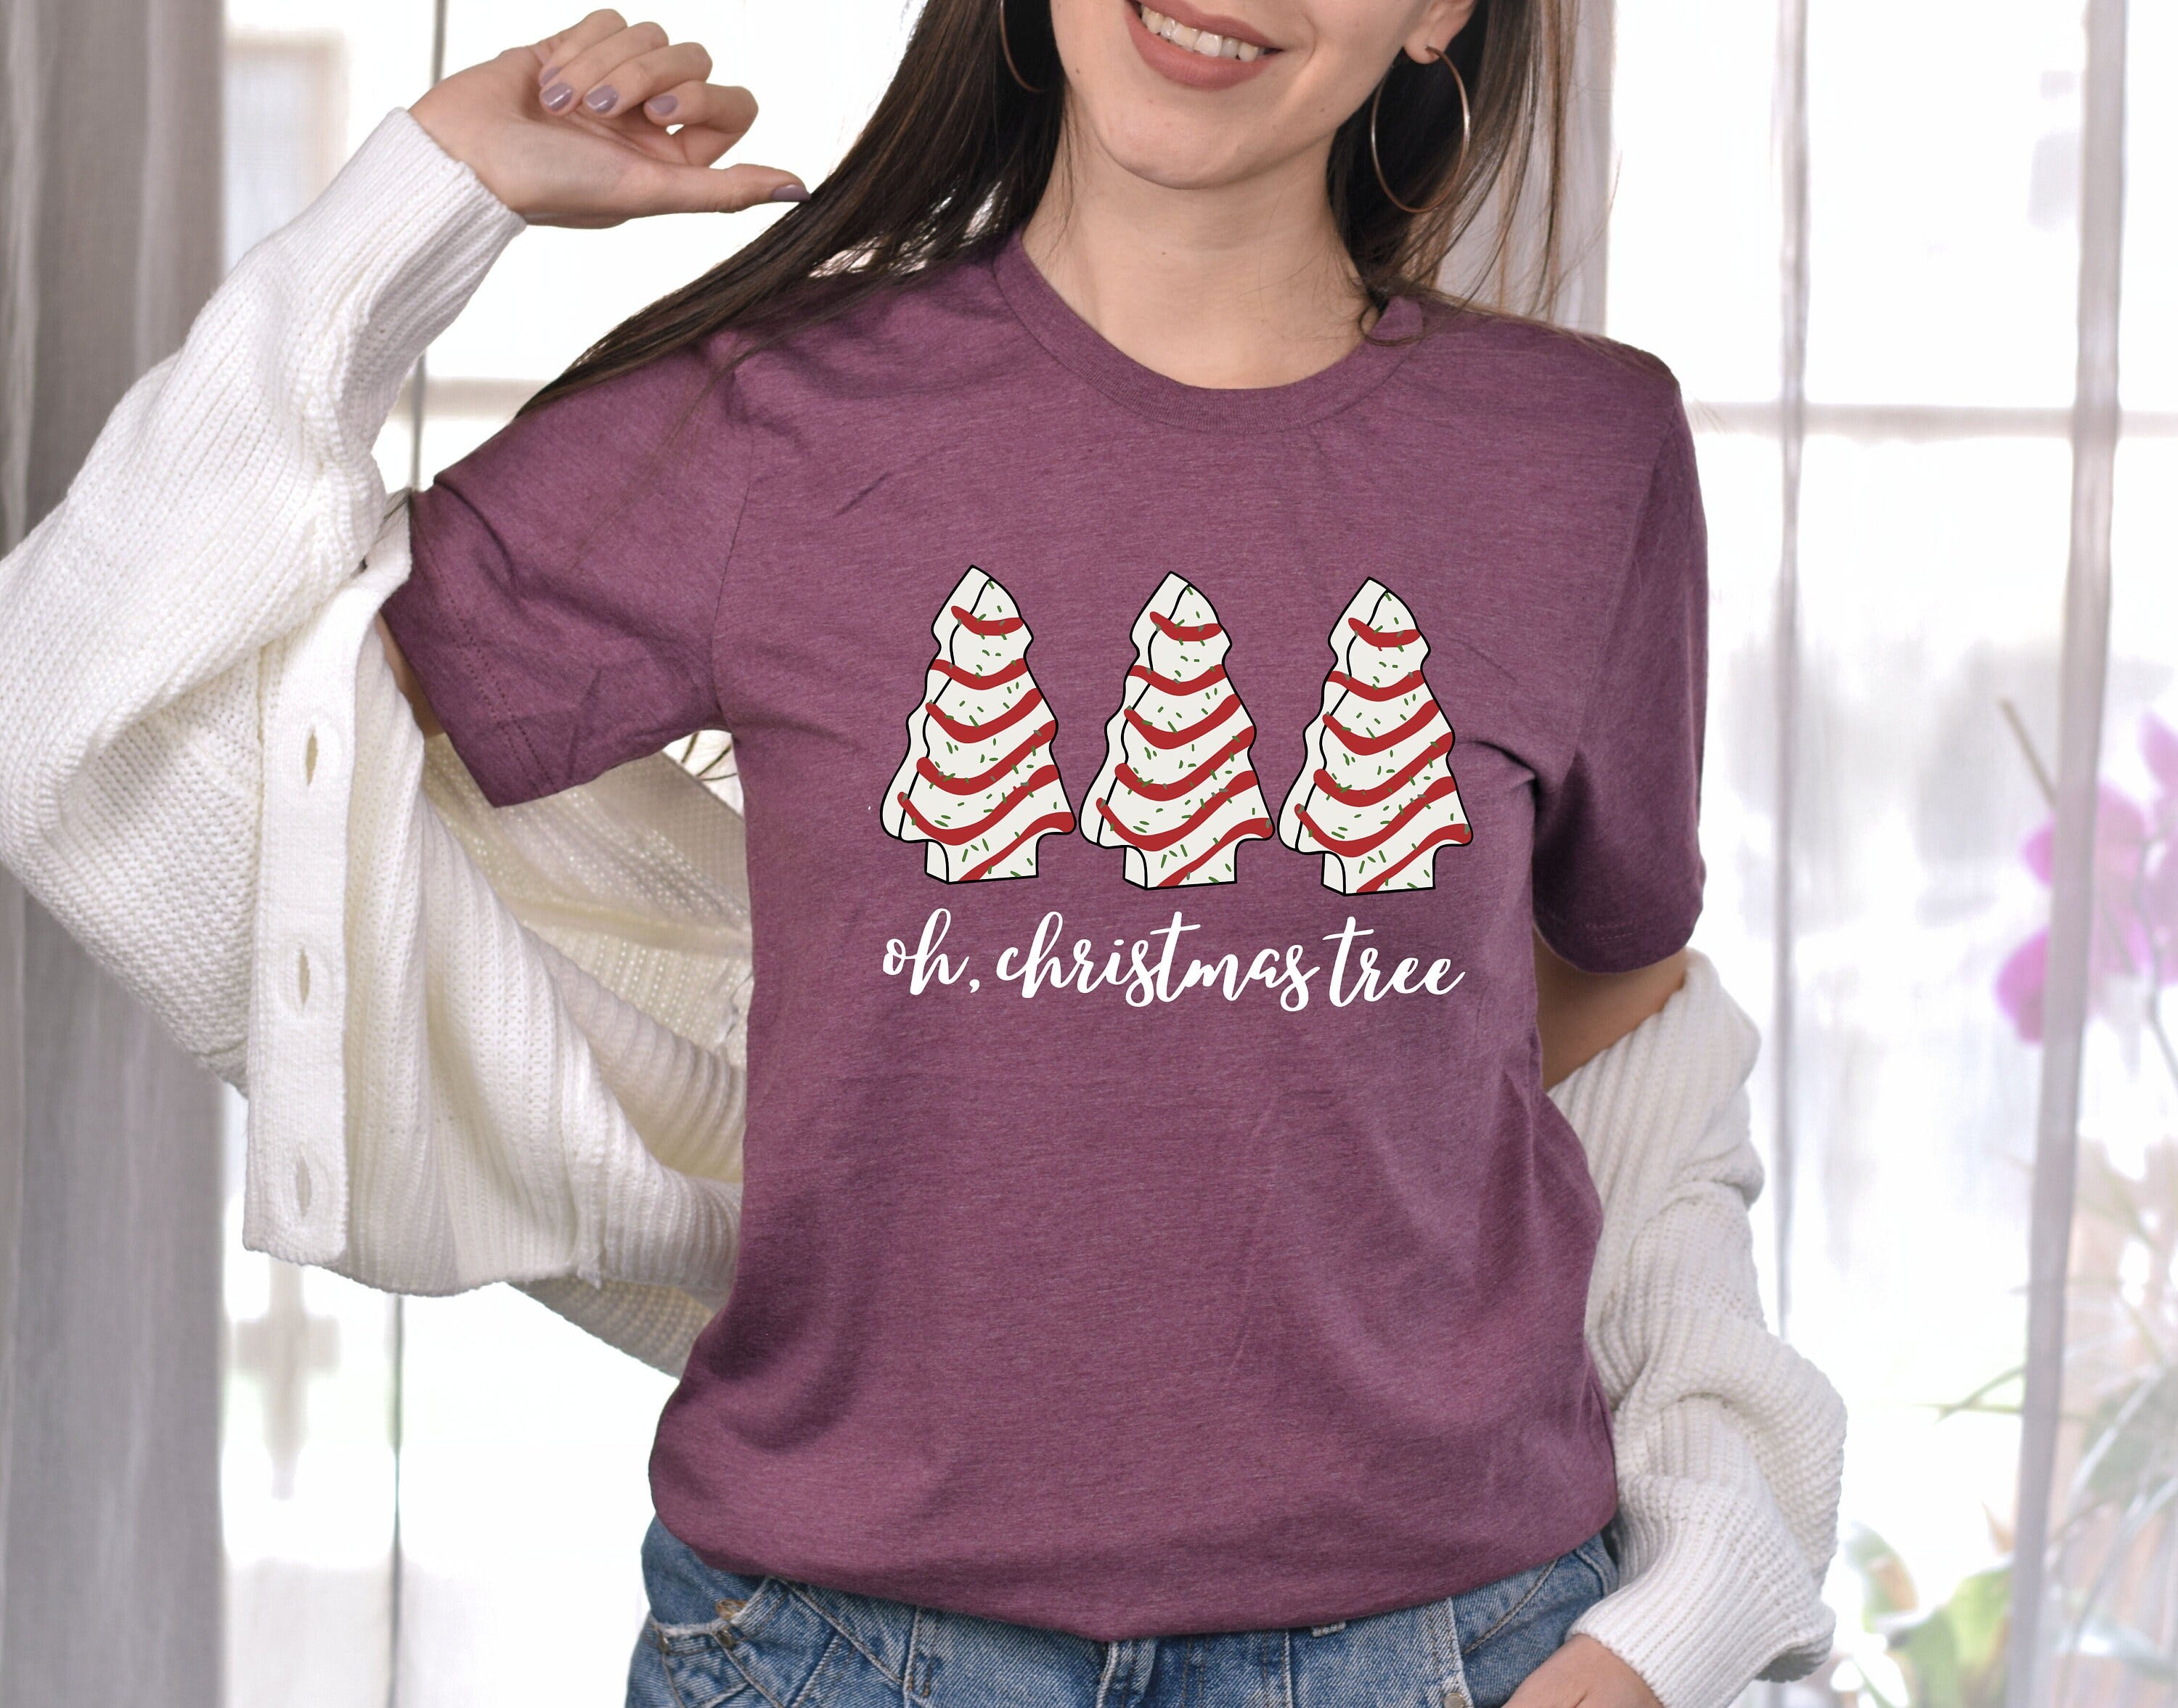 Oh Christmas Tree Cak Shirt, Debbie Christmas Tree Cake Shirt, Funny Tree Cake Shirt, Christmas Tree Shirt, Xmas Shirt